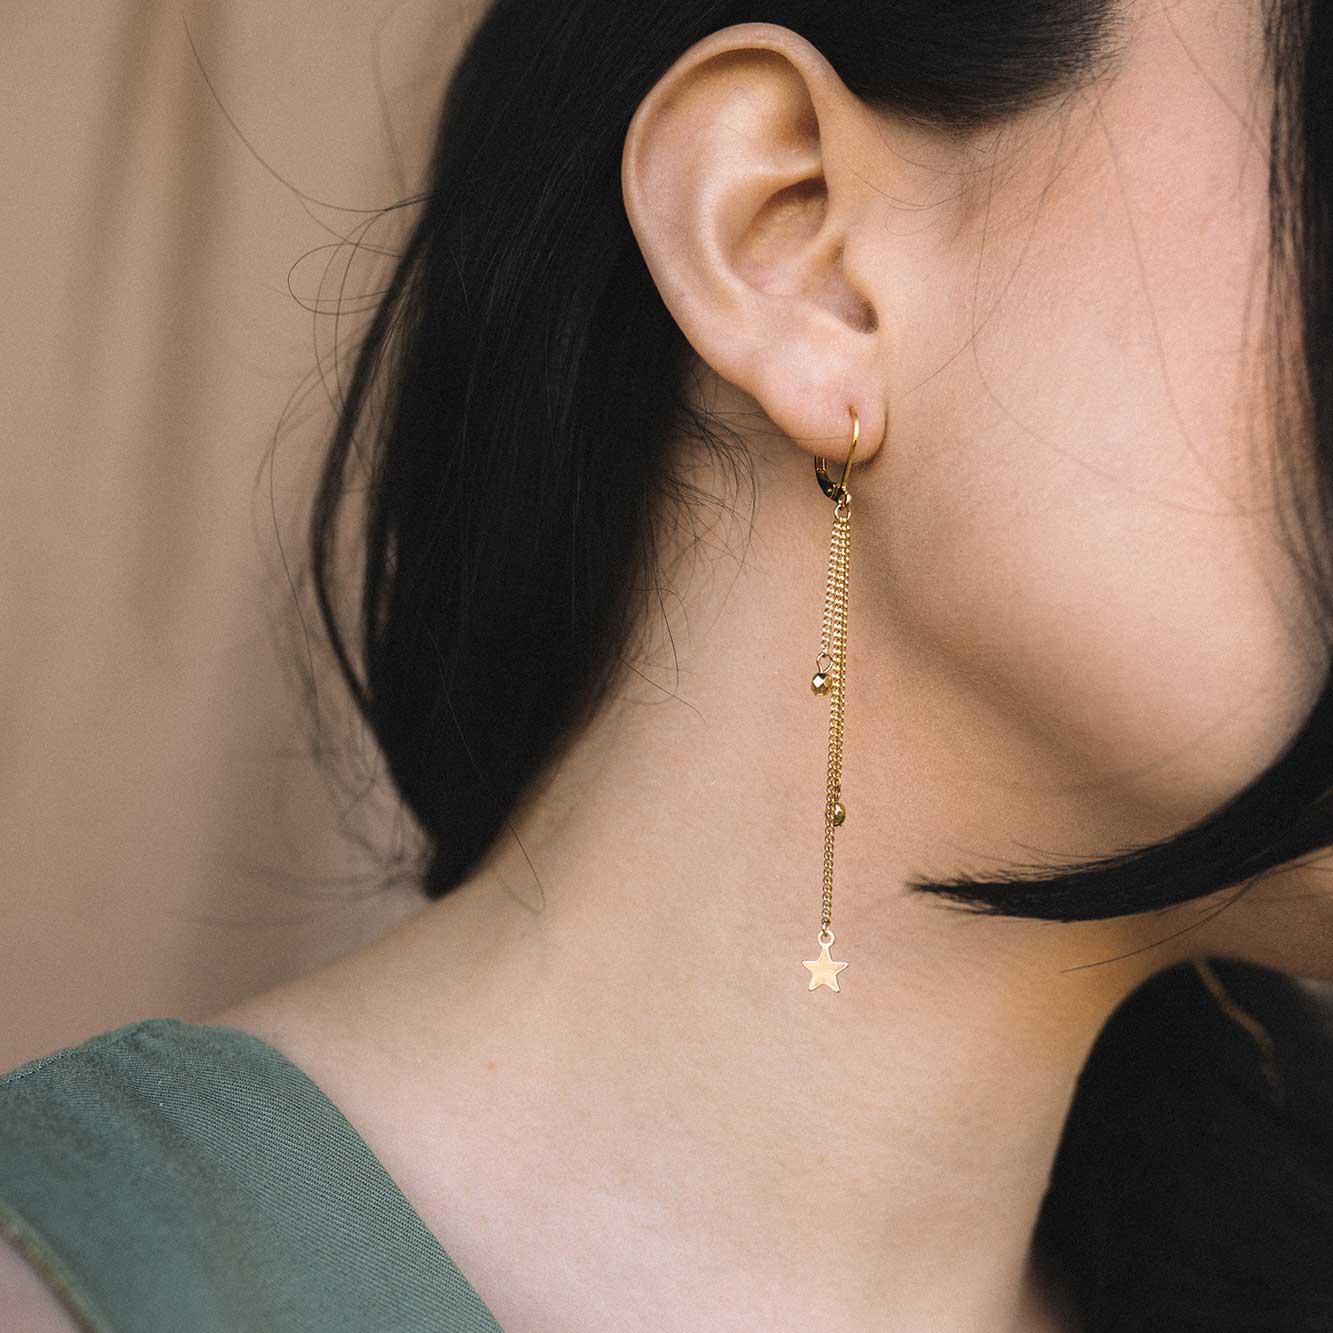 sandrine devost asymmetrical earrings stars and moon